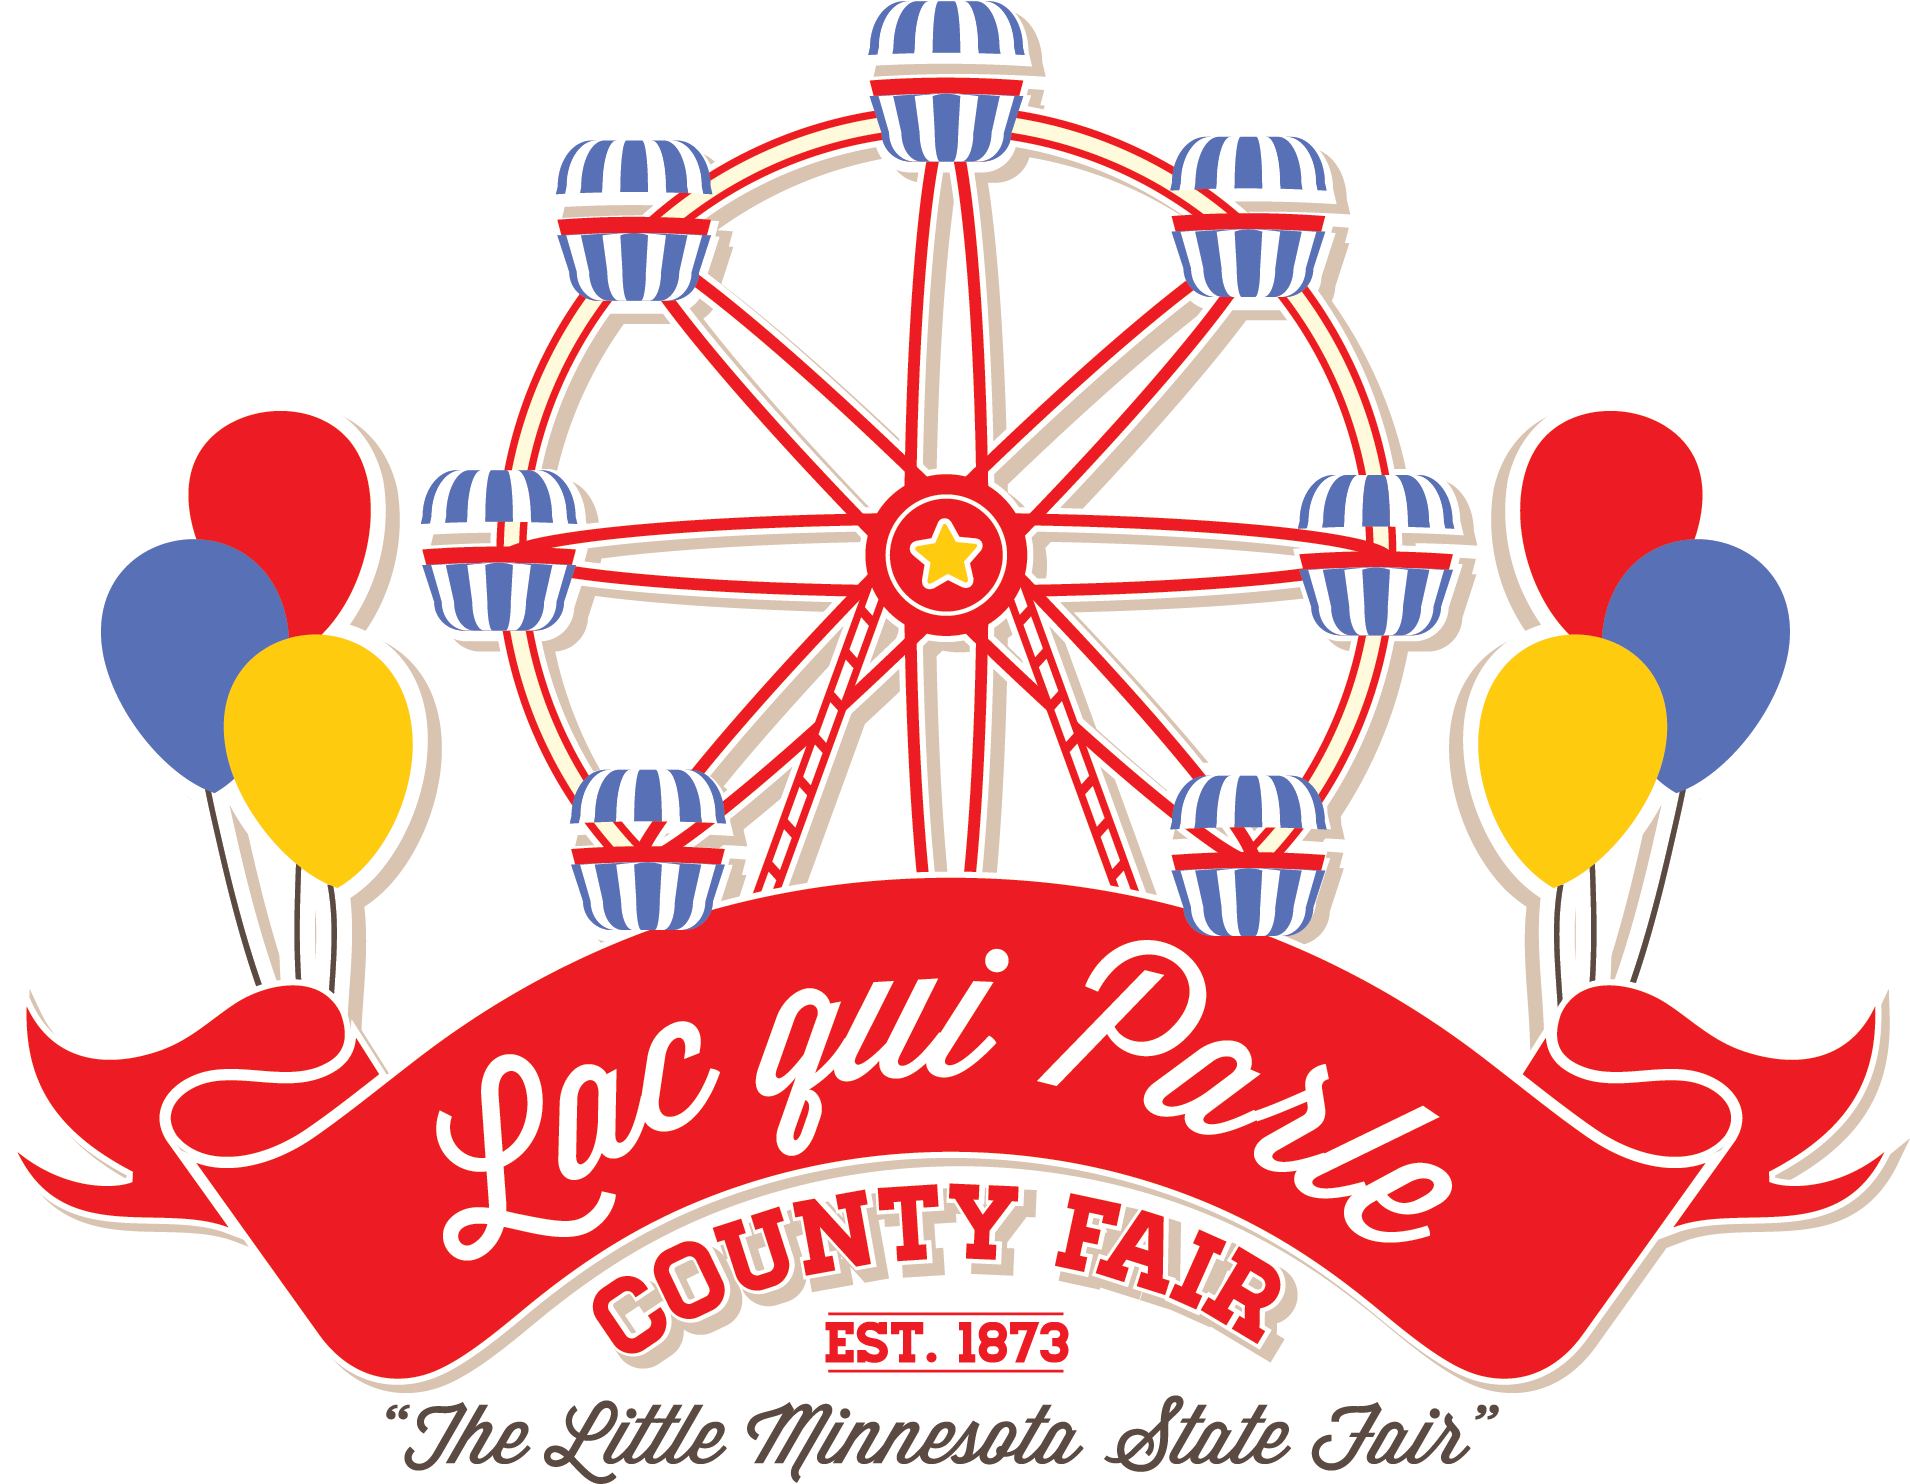 Fair Schedule LqP County Fair Celebrating 150 Years in 2023!